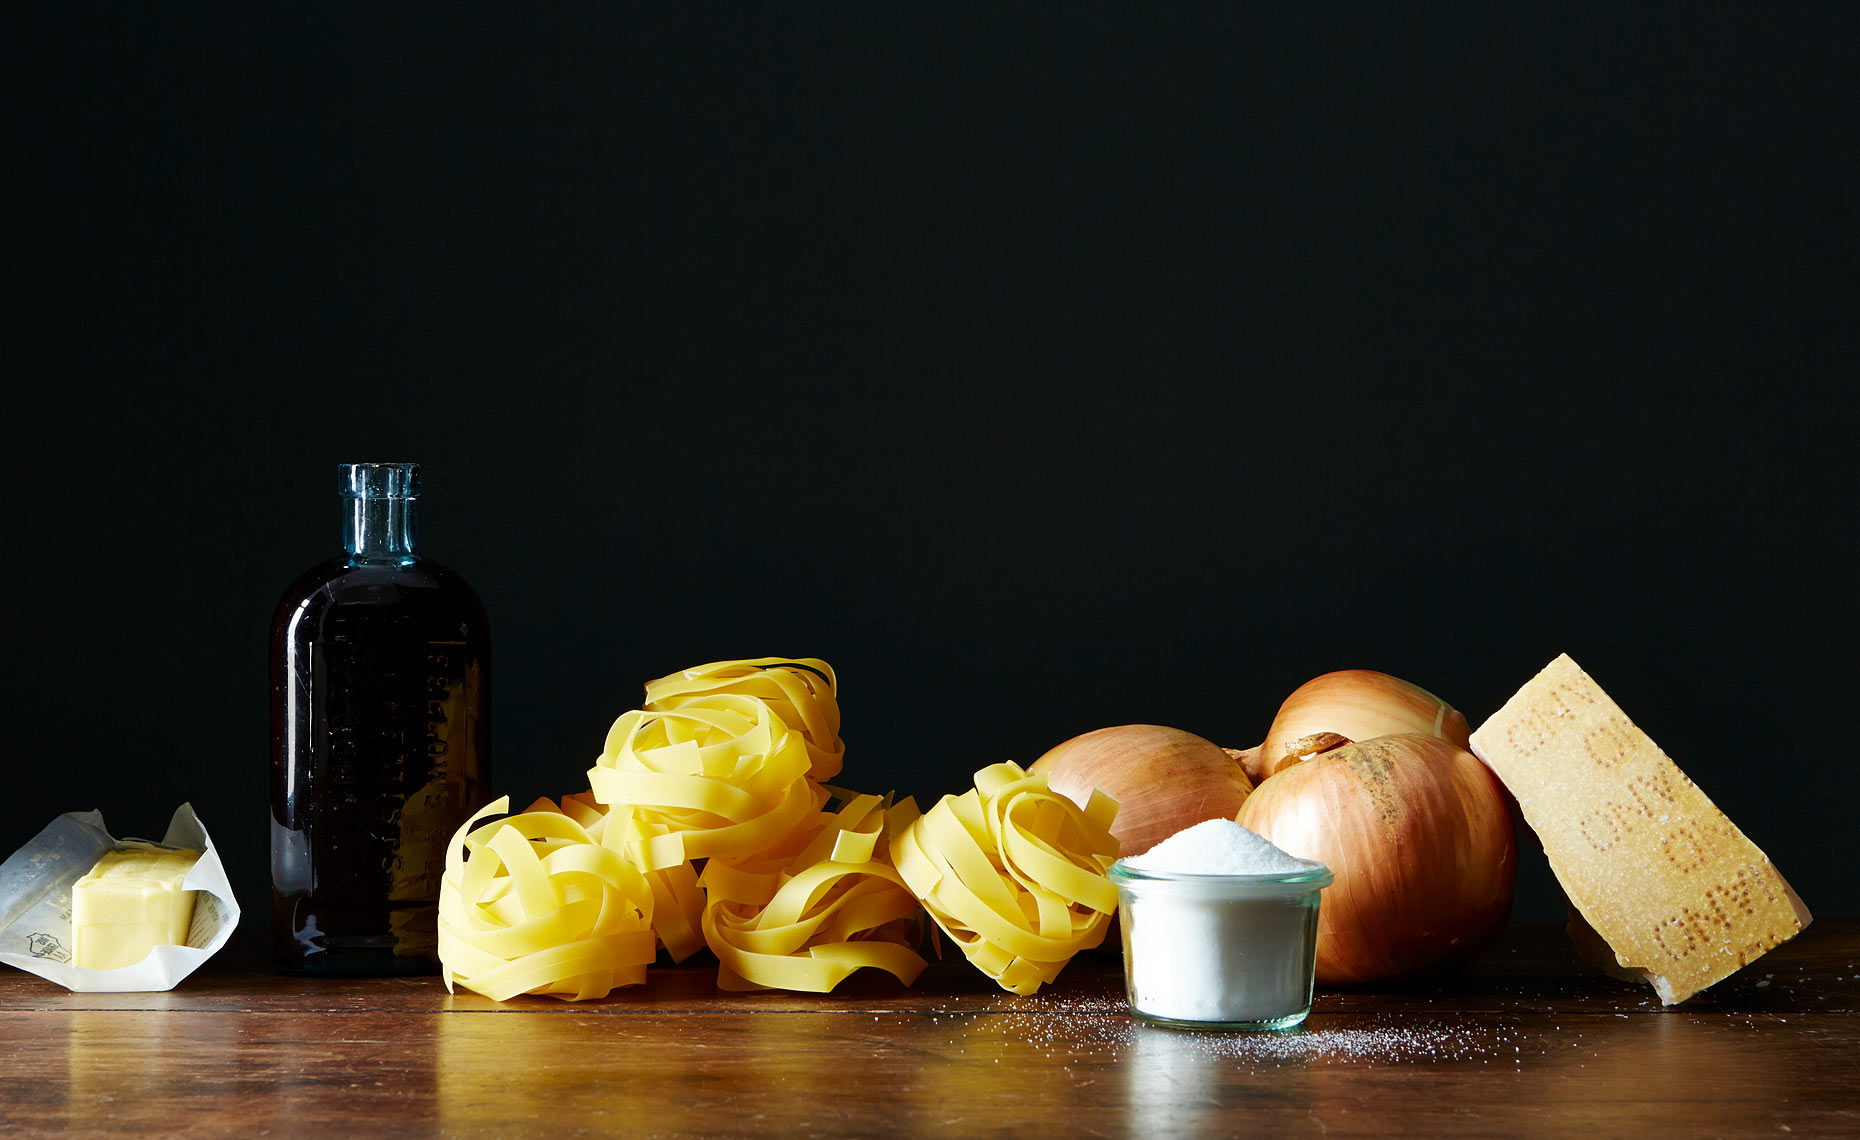 139_028_mark_weinberg_2015-0106_brased-onion-pasta-201